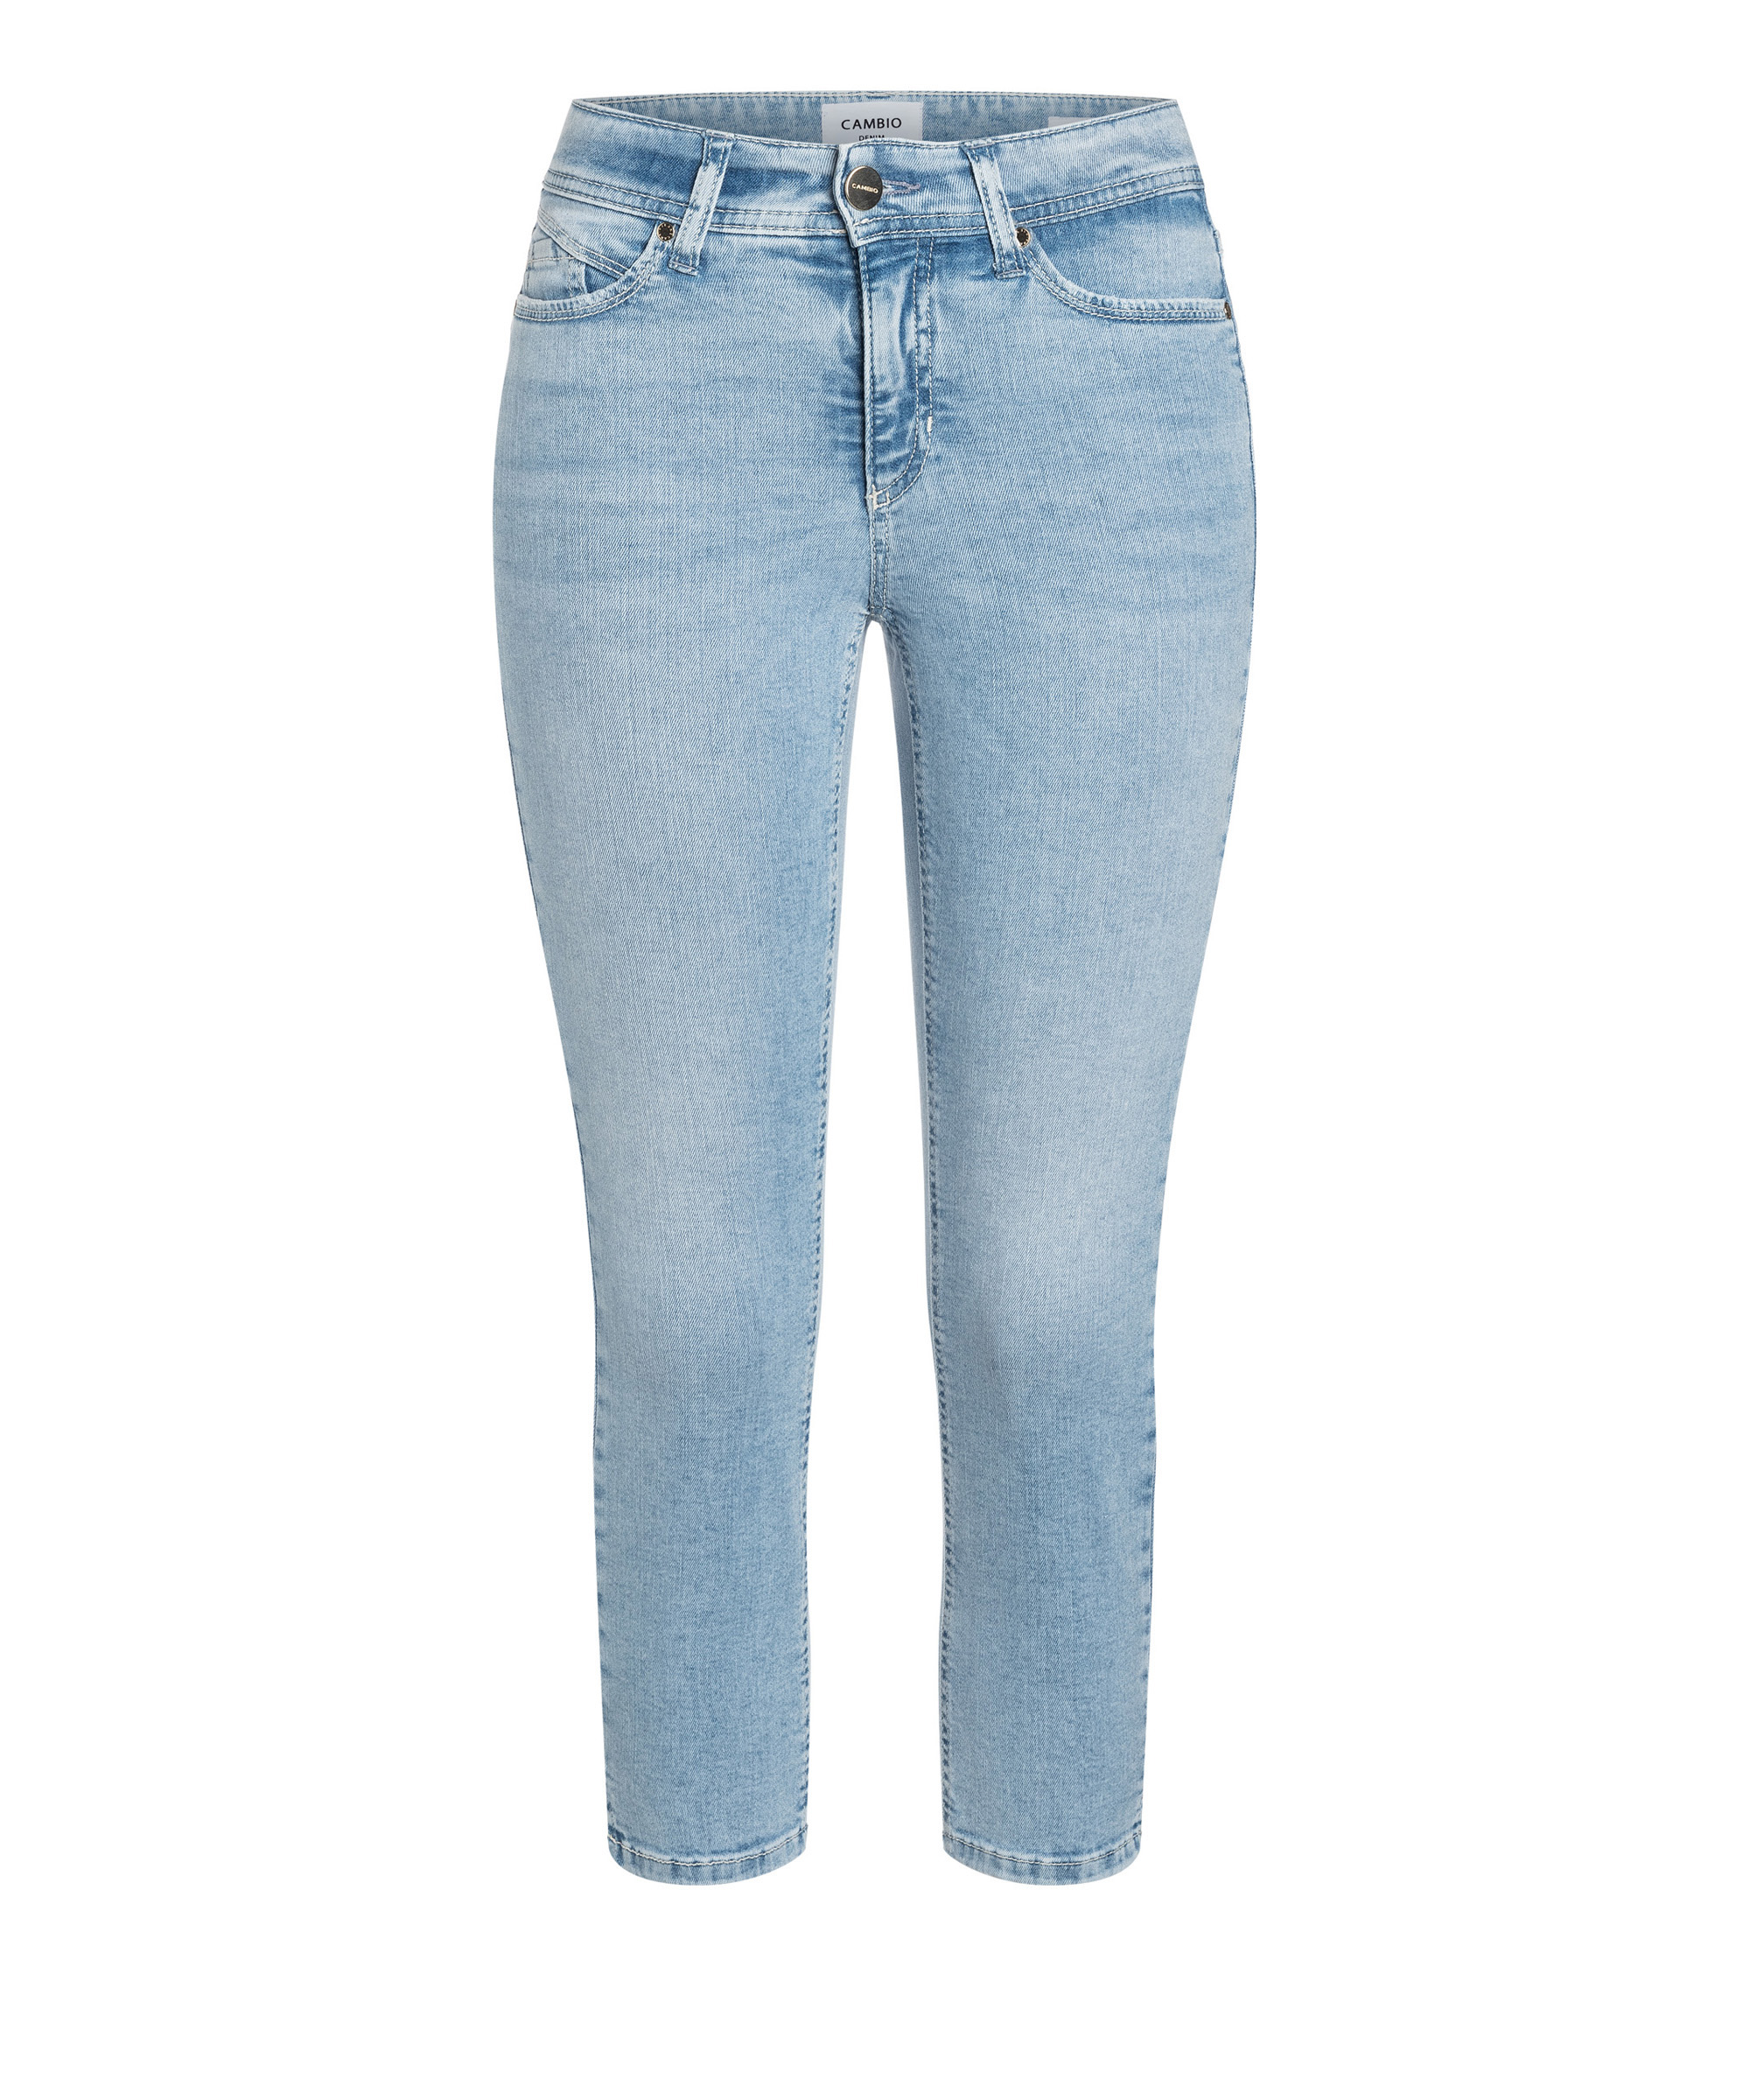 vijver Ounce een Cambio Pants & Jeans -> shop online at scarpaRossa.com